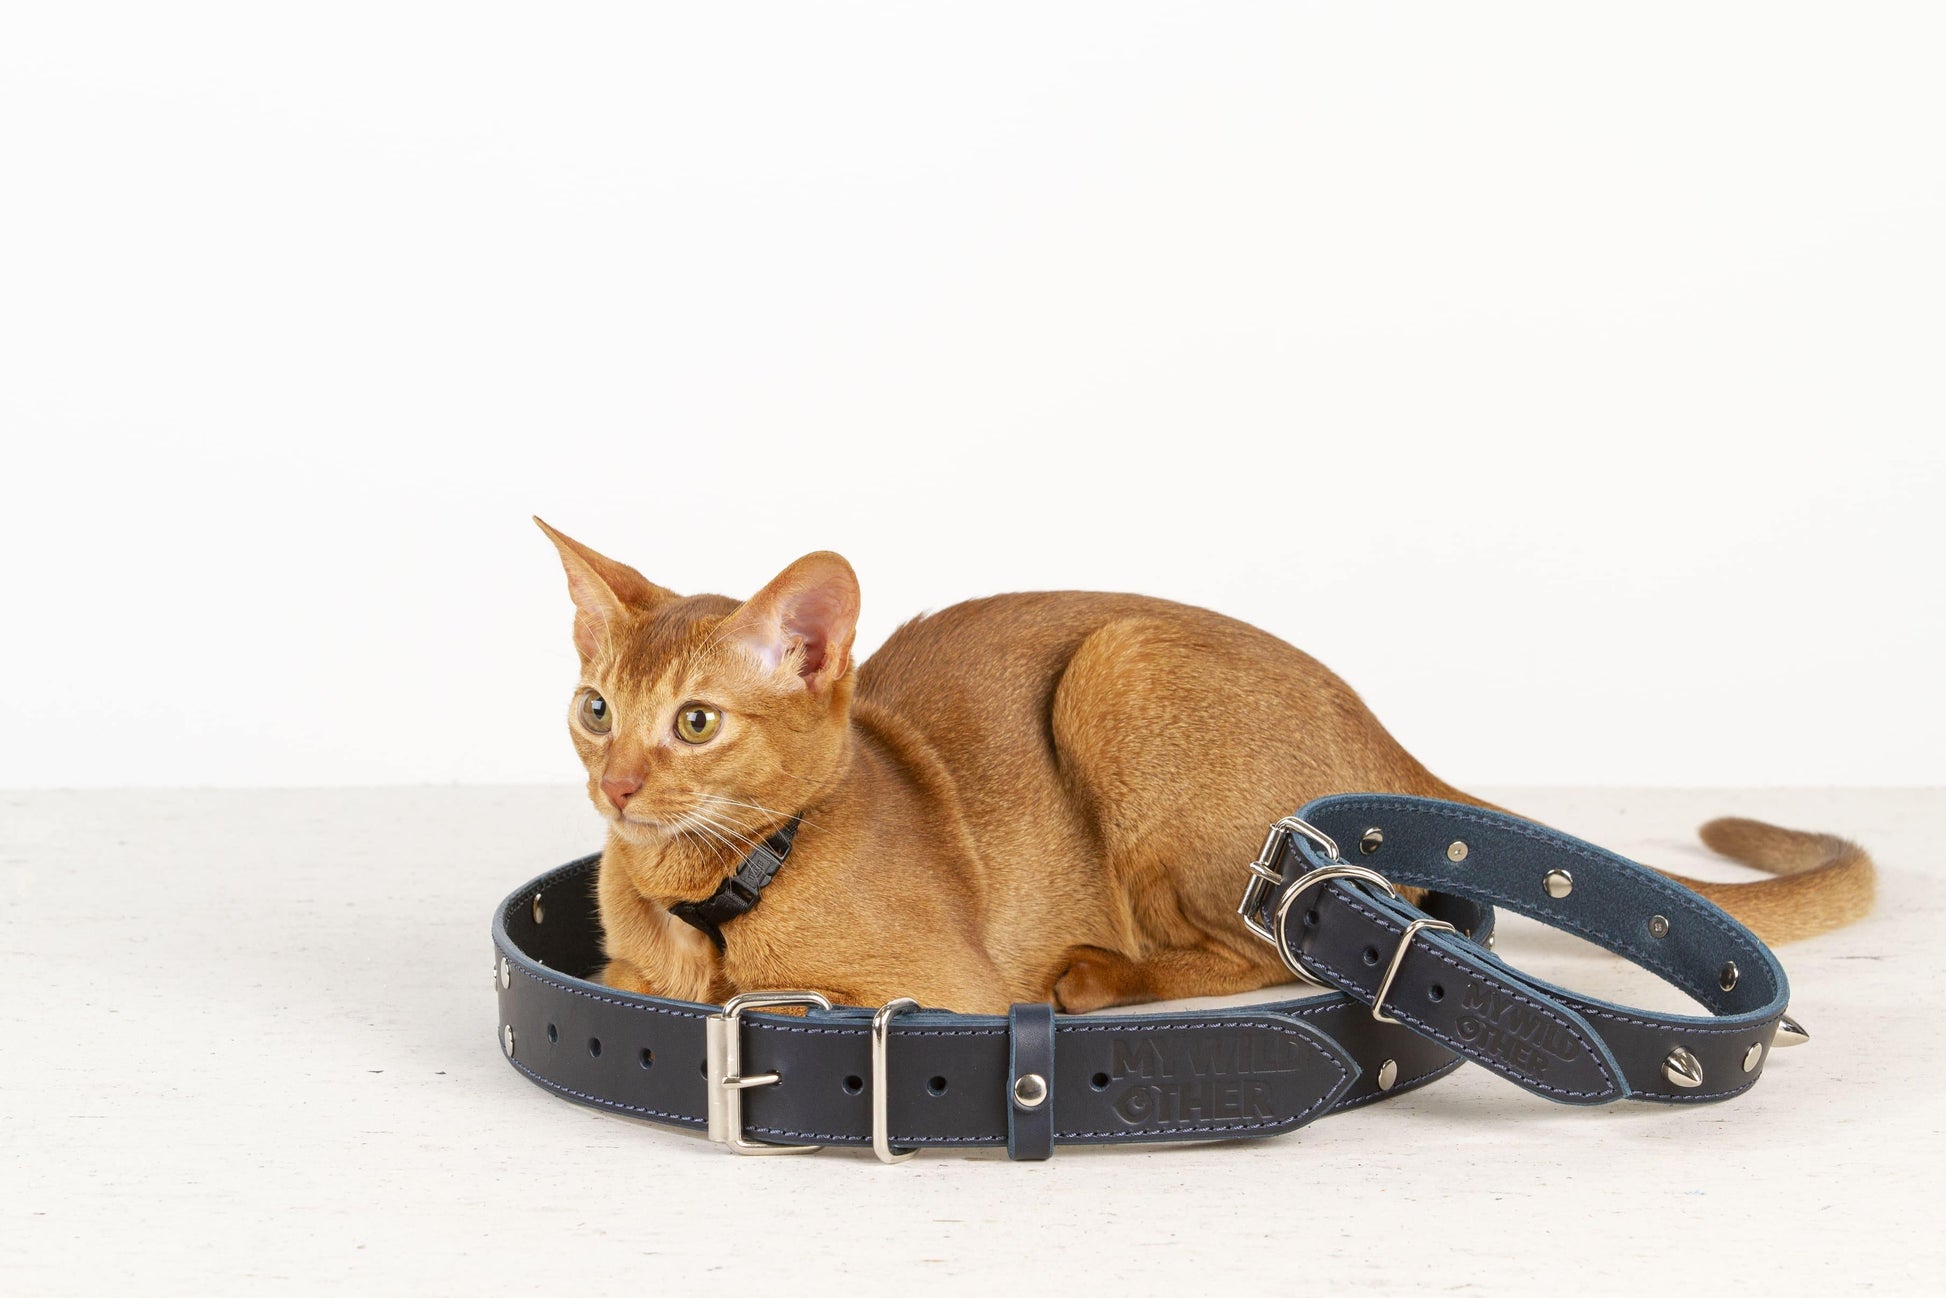 Handmade blue leather STUDDED dog collar - premium dog goods handmade in Europe by animalistus